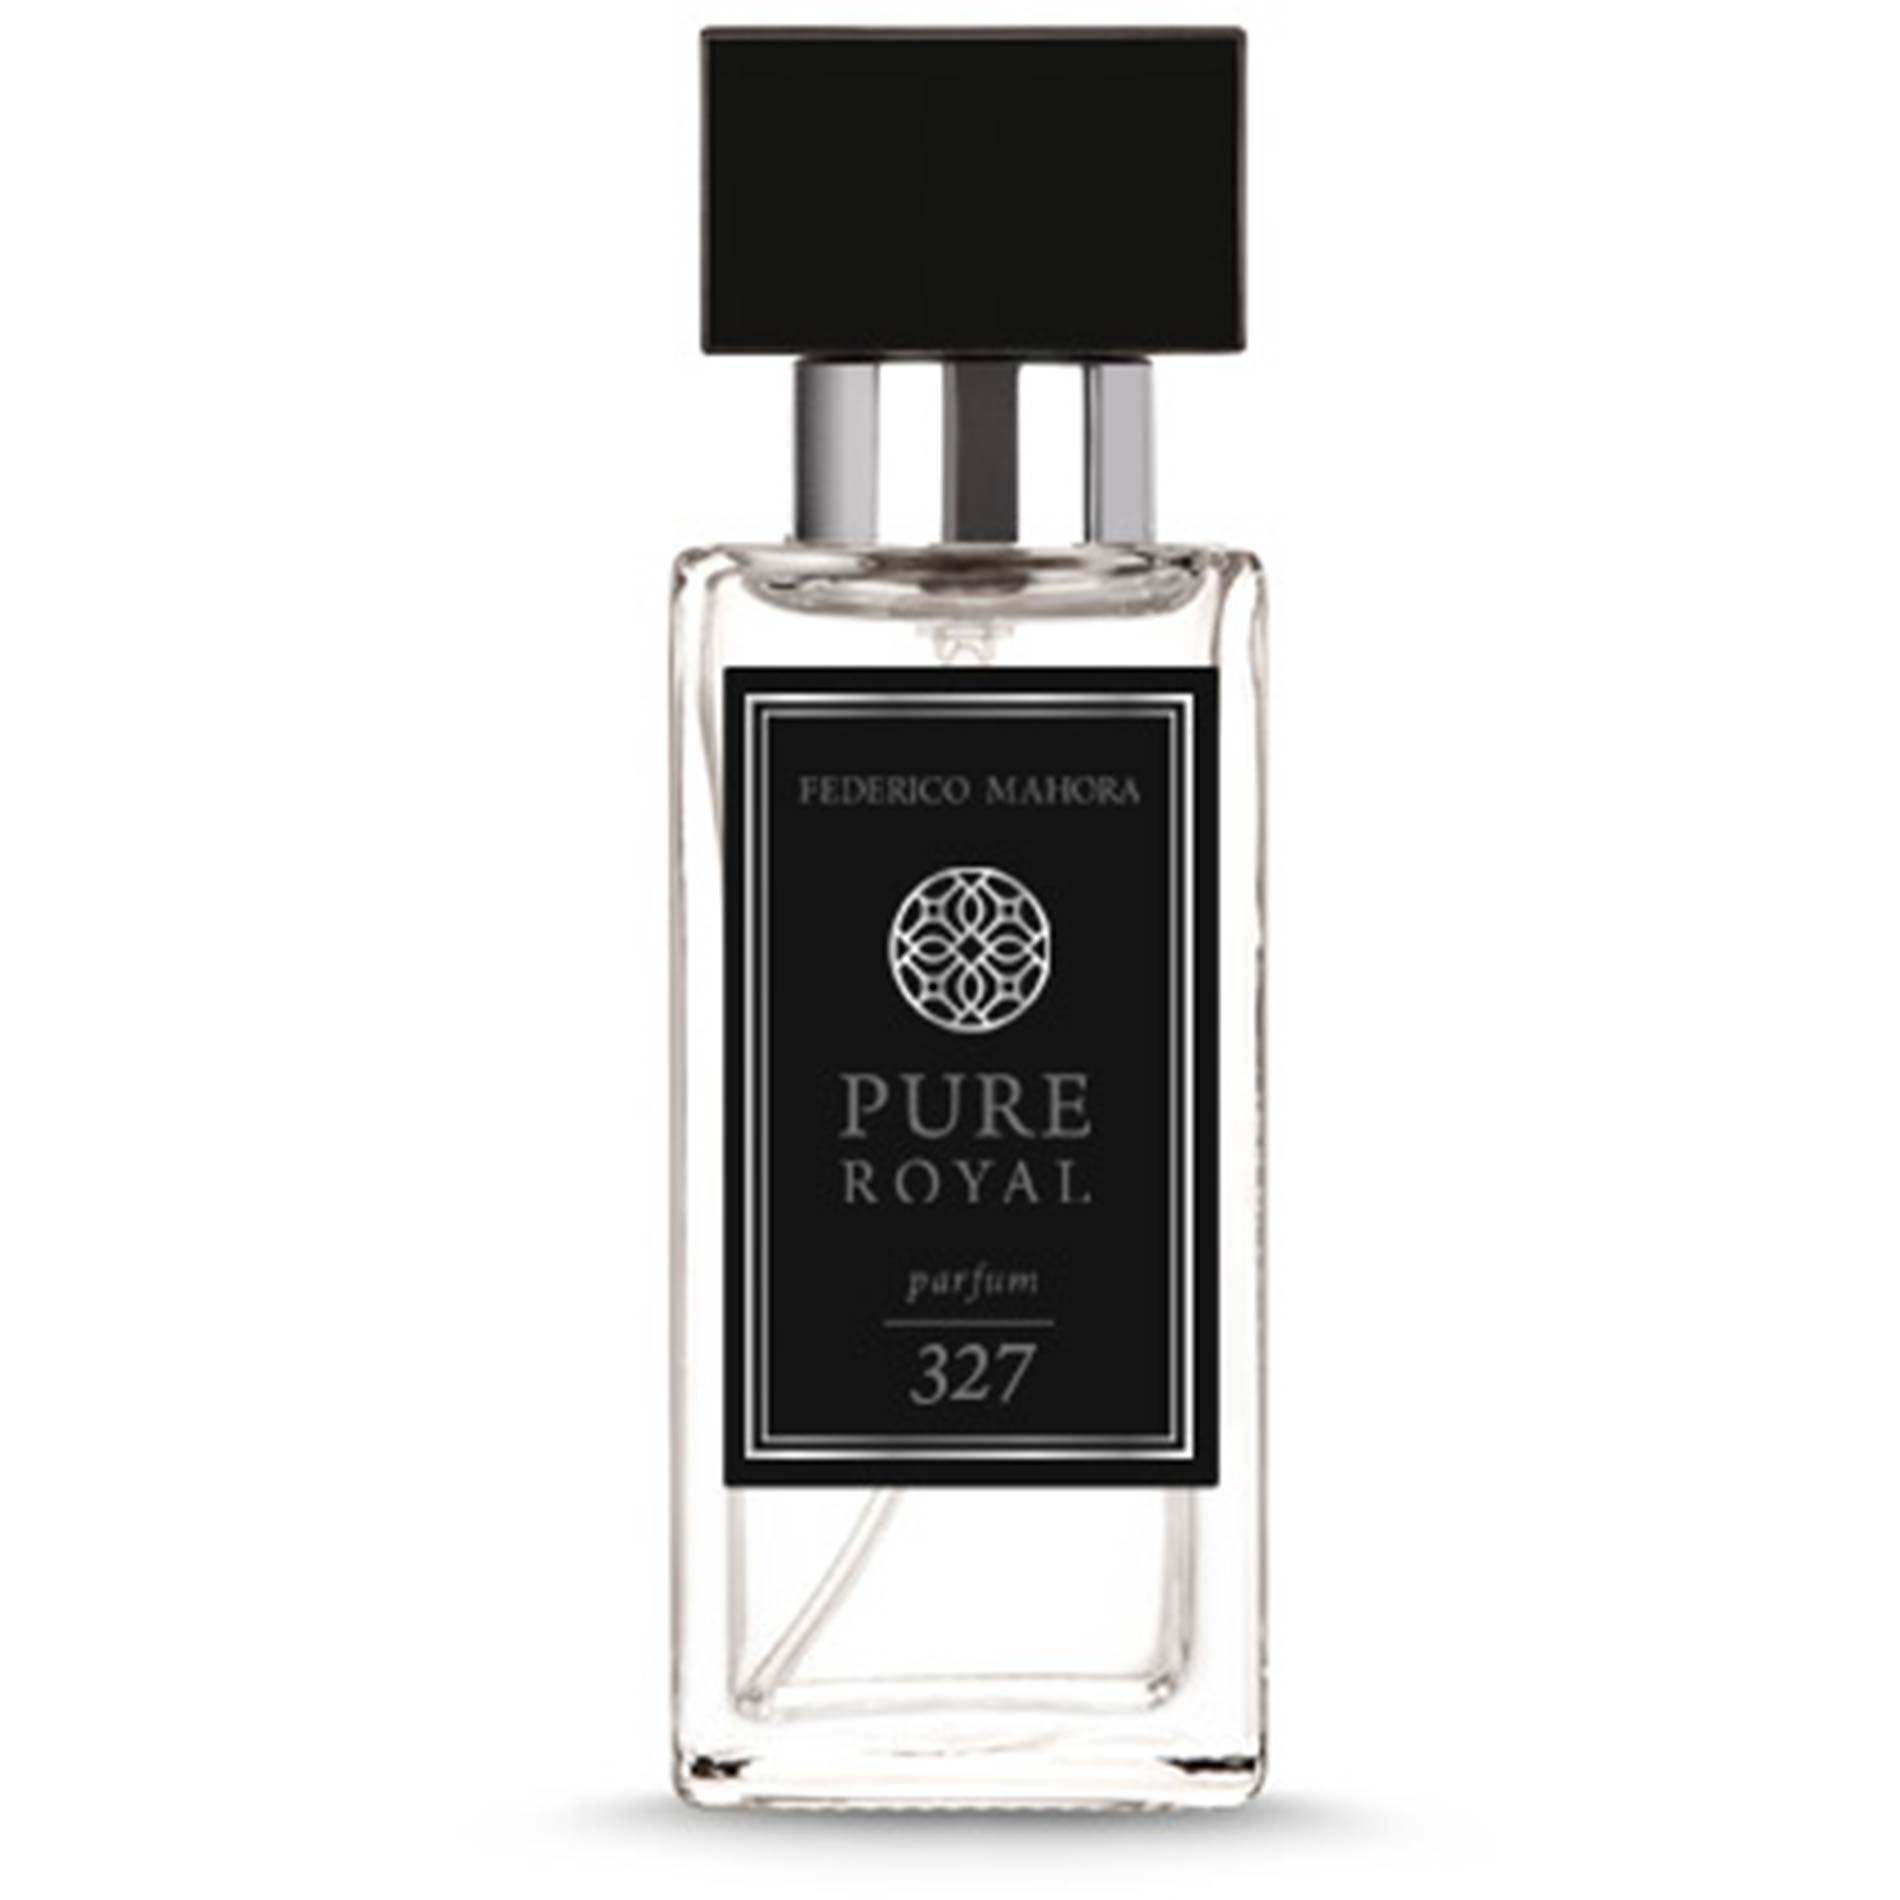 PURE ROYAL 327 Parfum by Federico Mahora